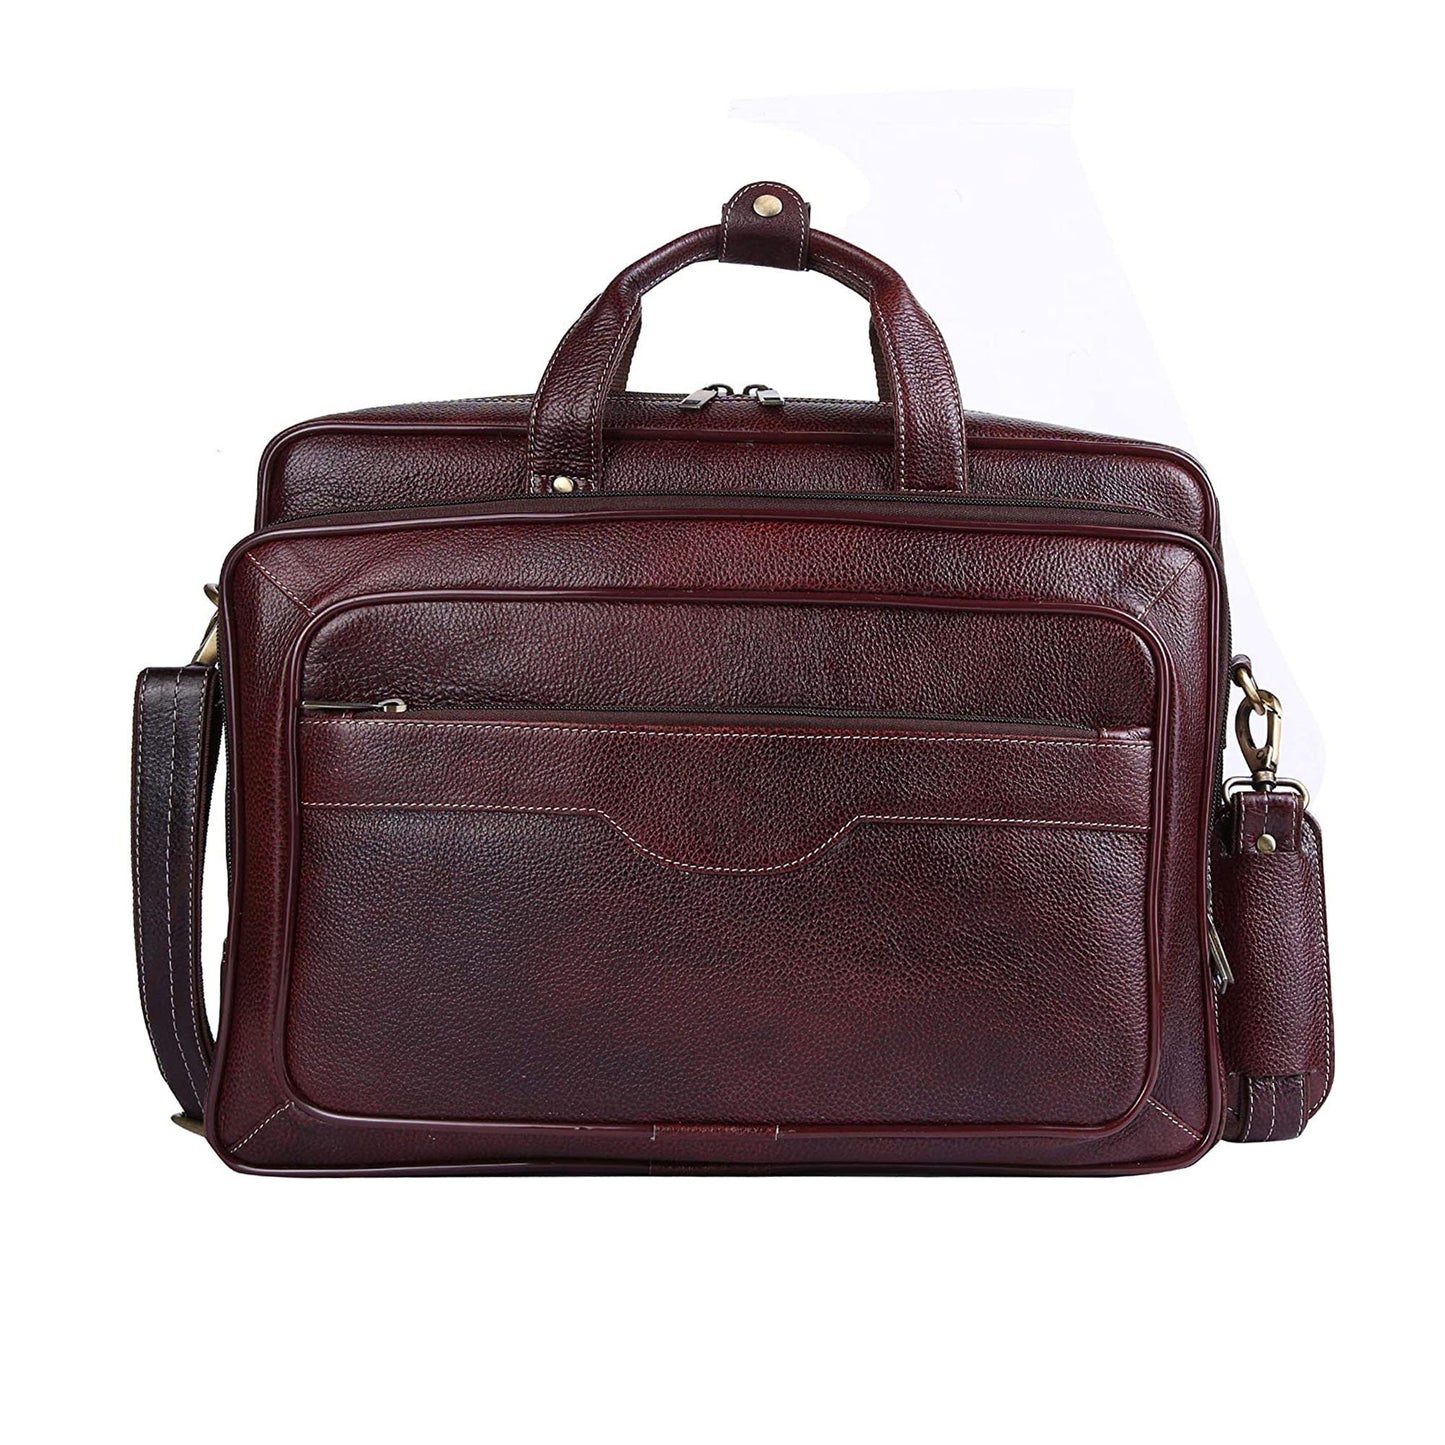 LINDSEY STREET Pure Black Leather Laptop Messenger Bag for Men | Expandable Leather Bags | Leather Office Bag for Men | MacBook iPad Handbag